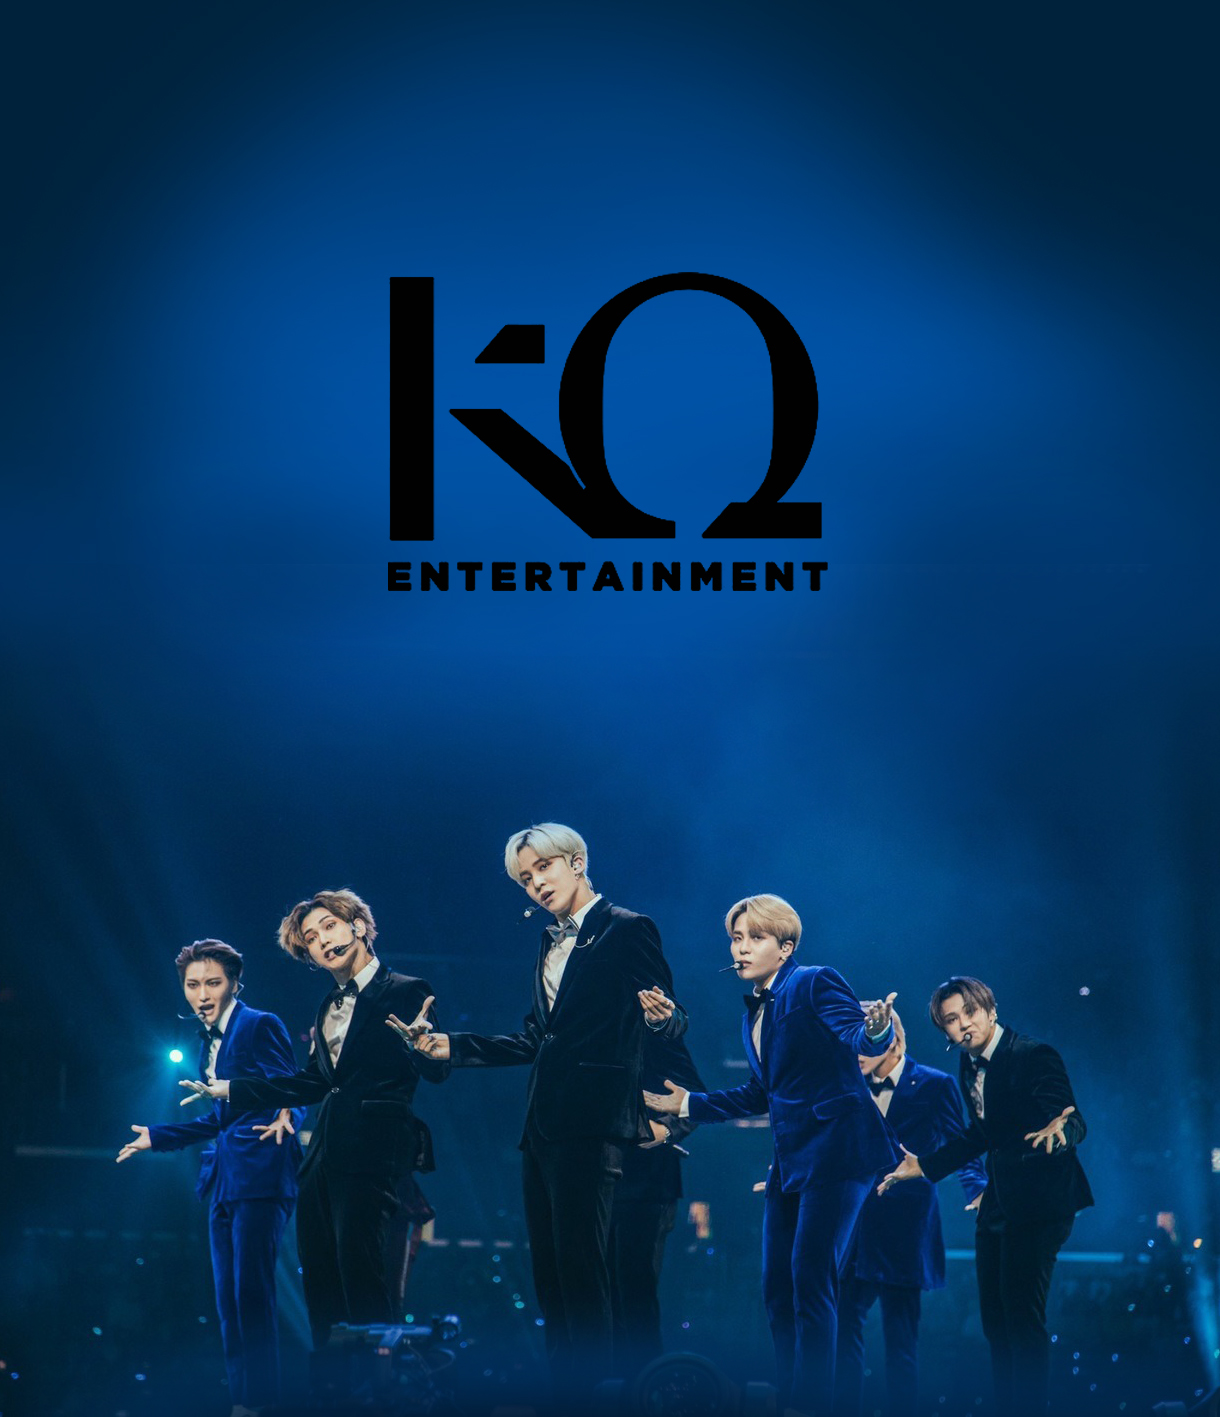 Kq entertainment